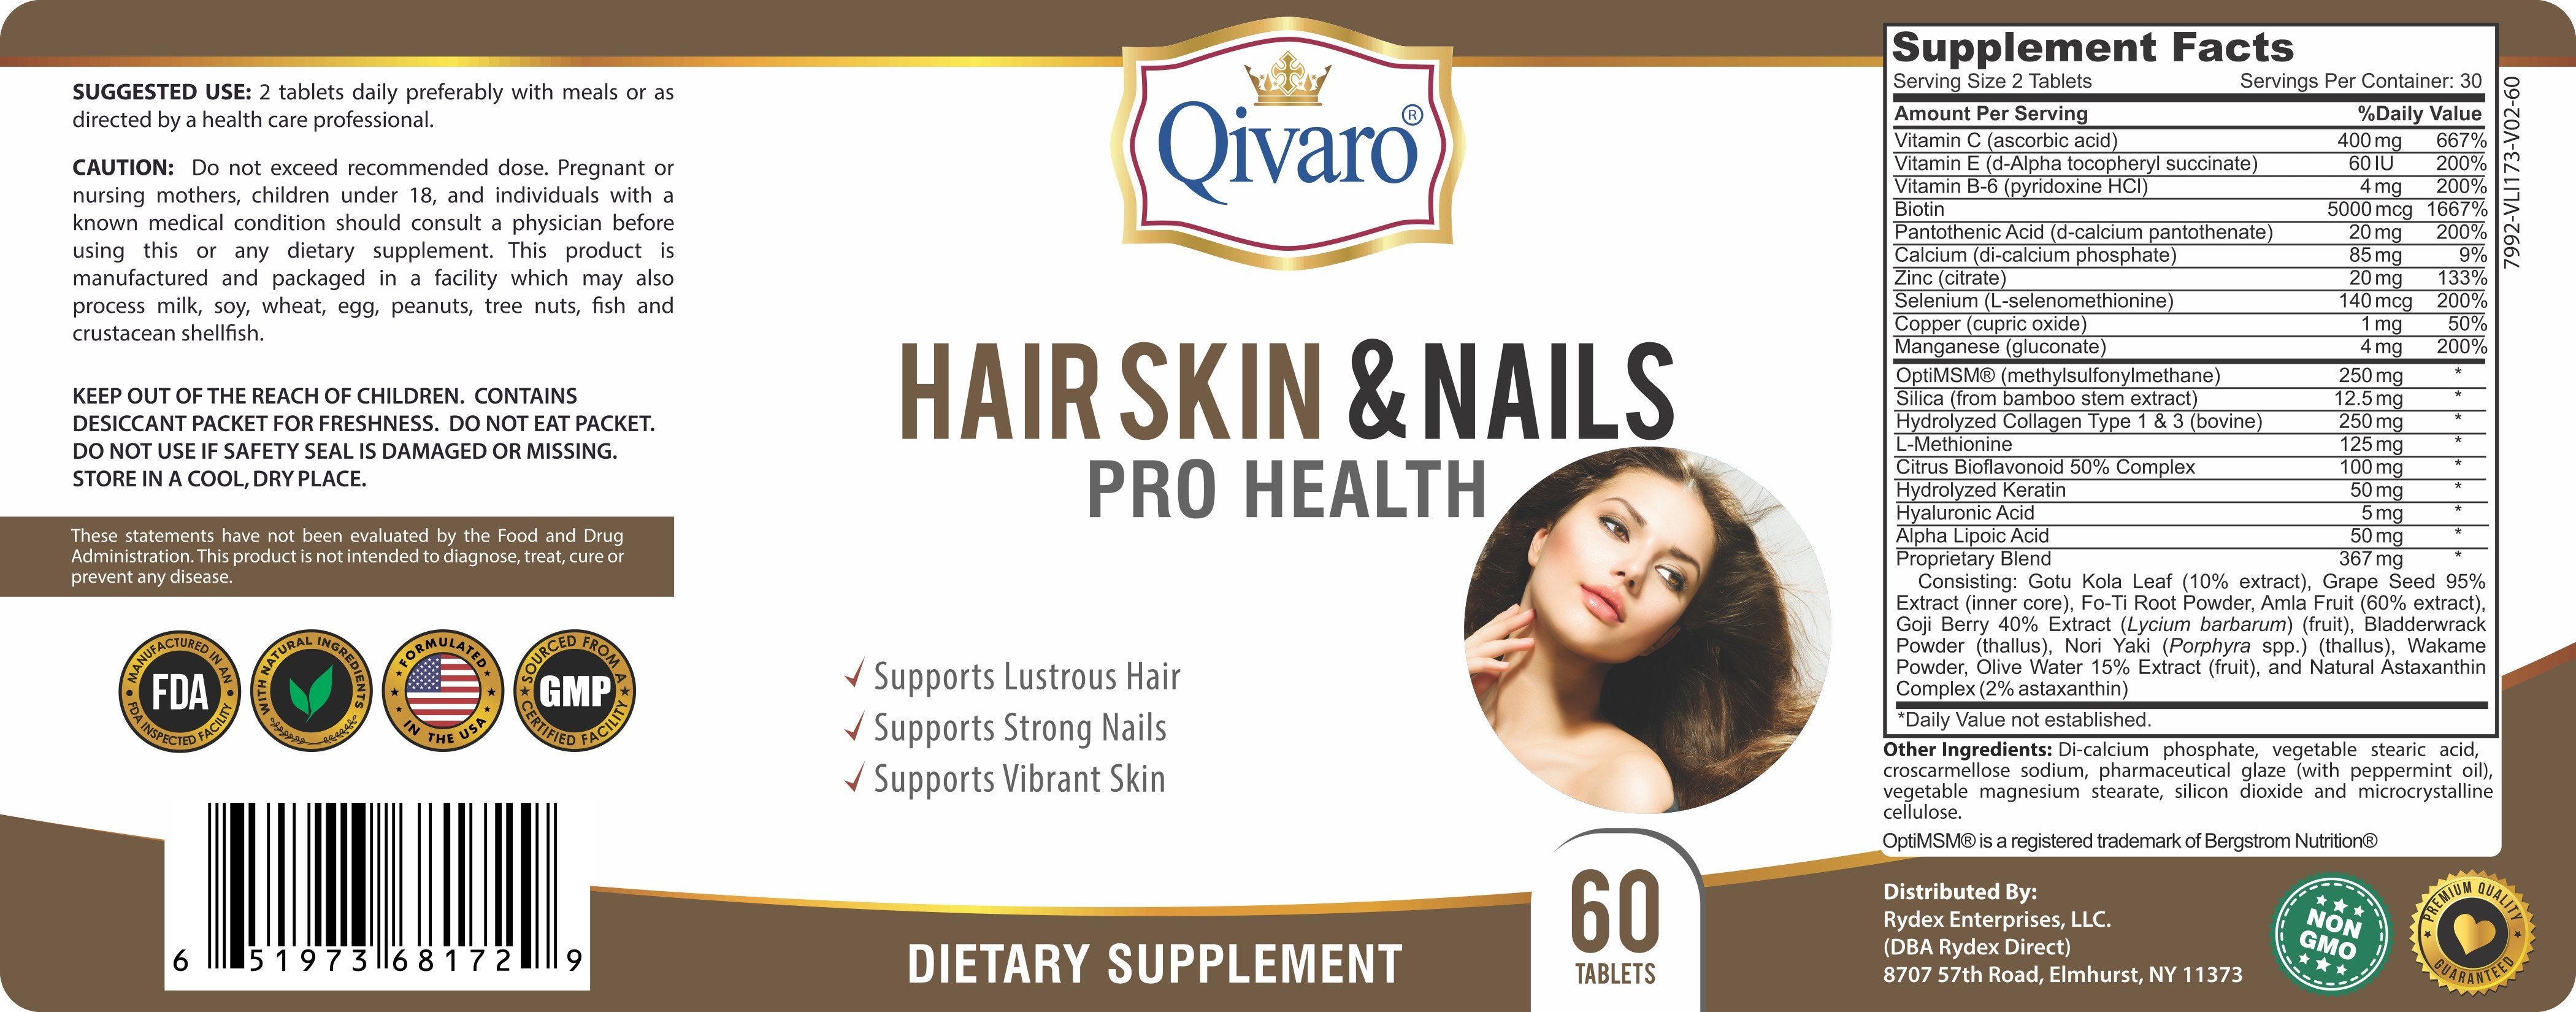 SKU:QIH43a-Hair Skin & Nails Pro Health